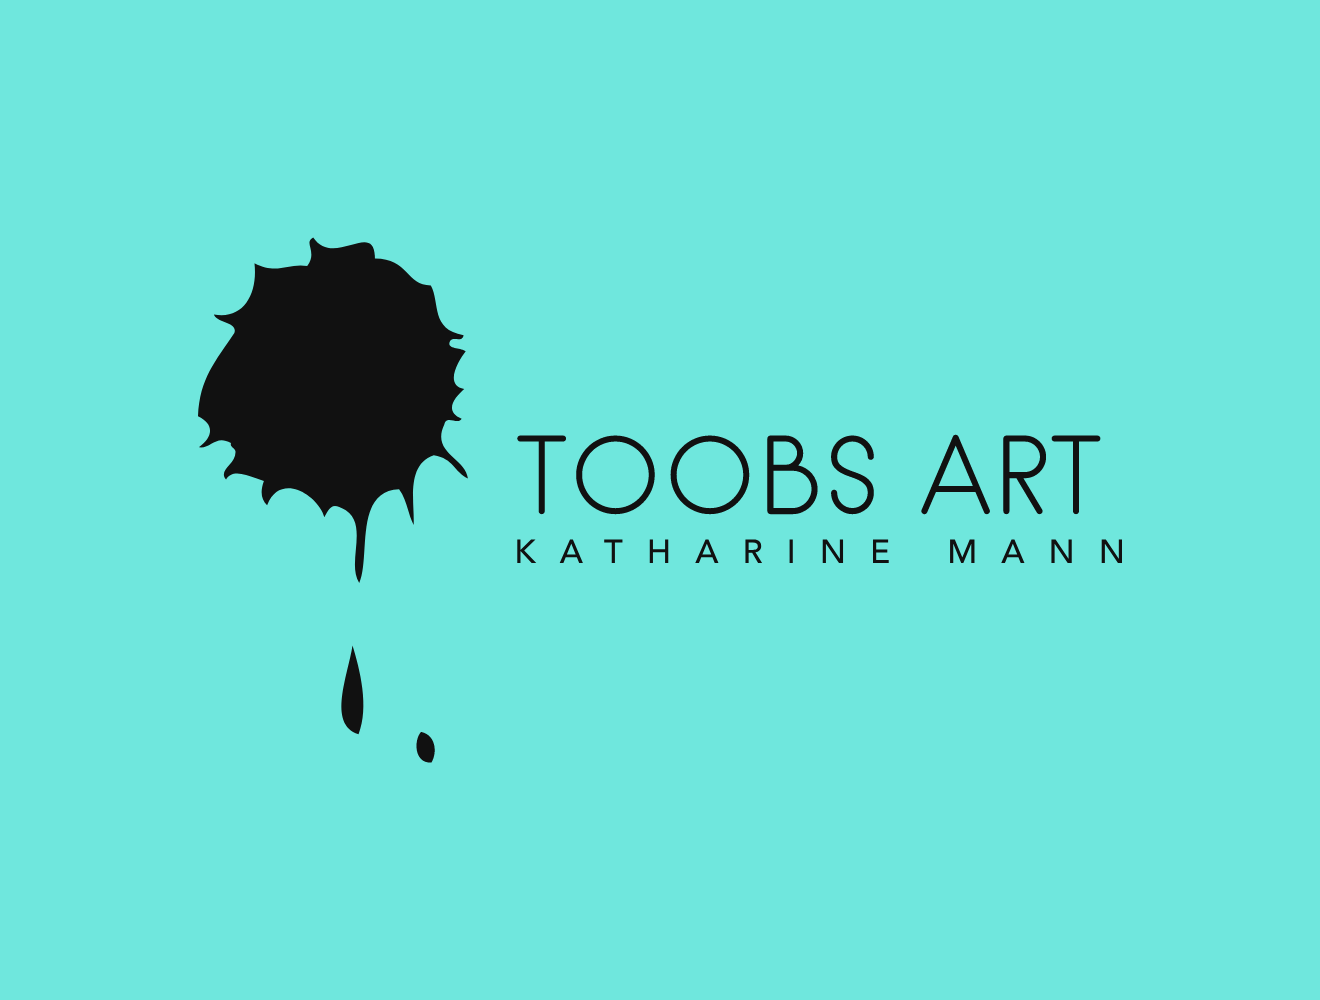  Toobs Art - contact artist Katharine Mann